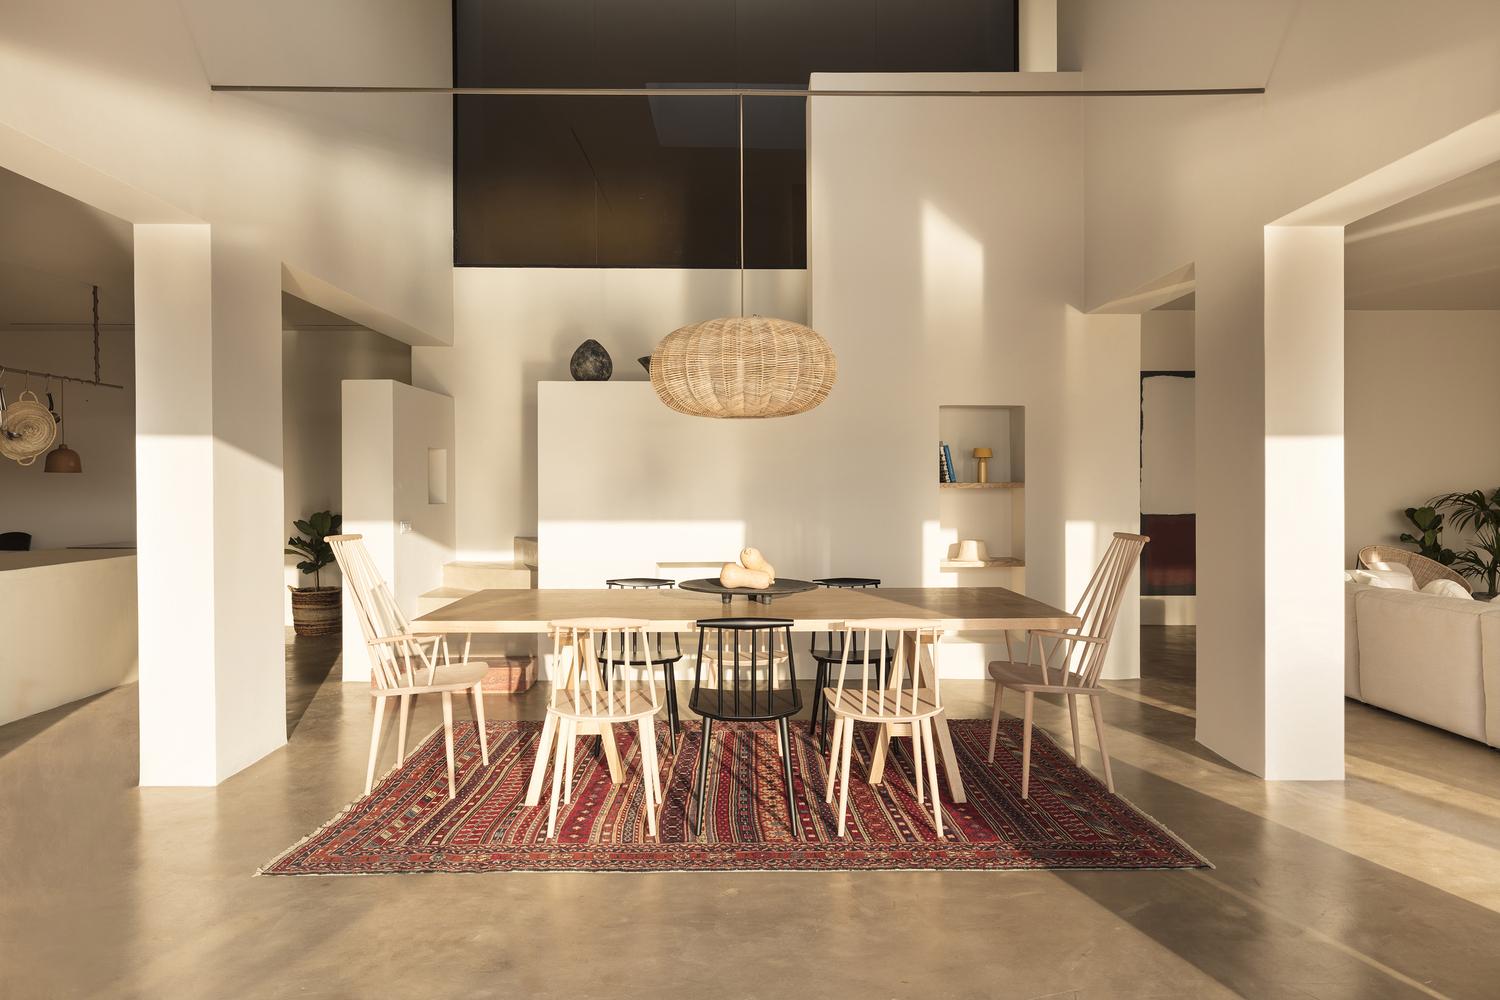 Kapsimalis Architects’ Summer Villa Encapsulates Breezy Santorini